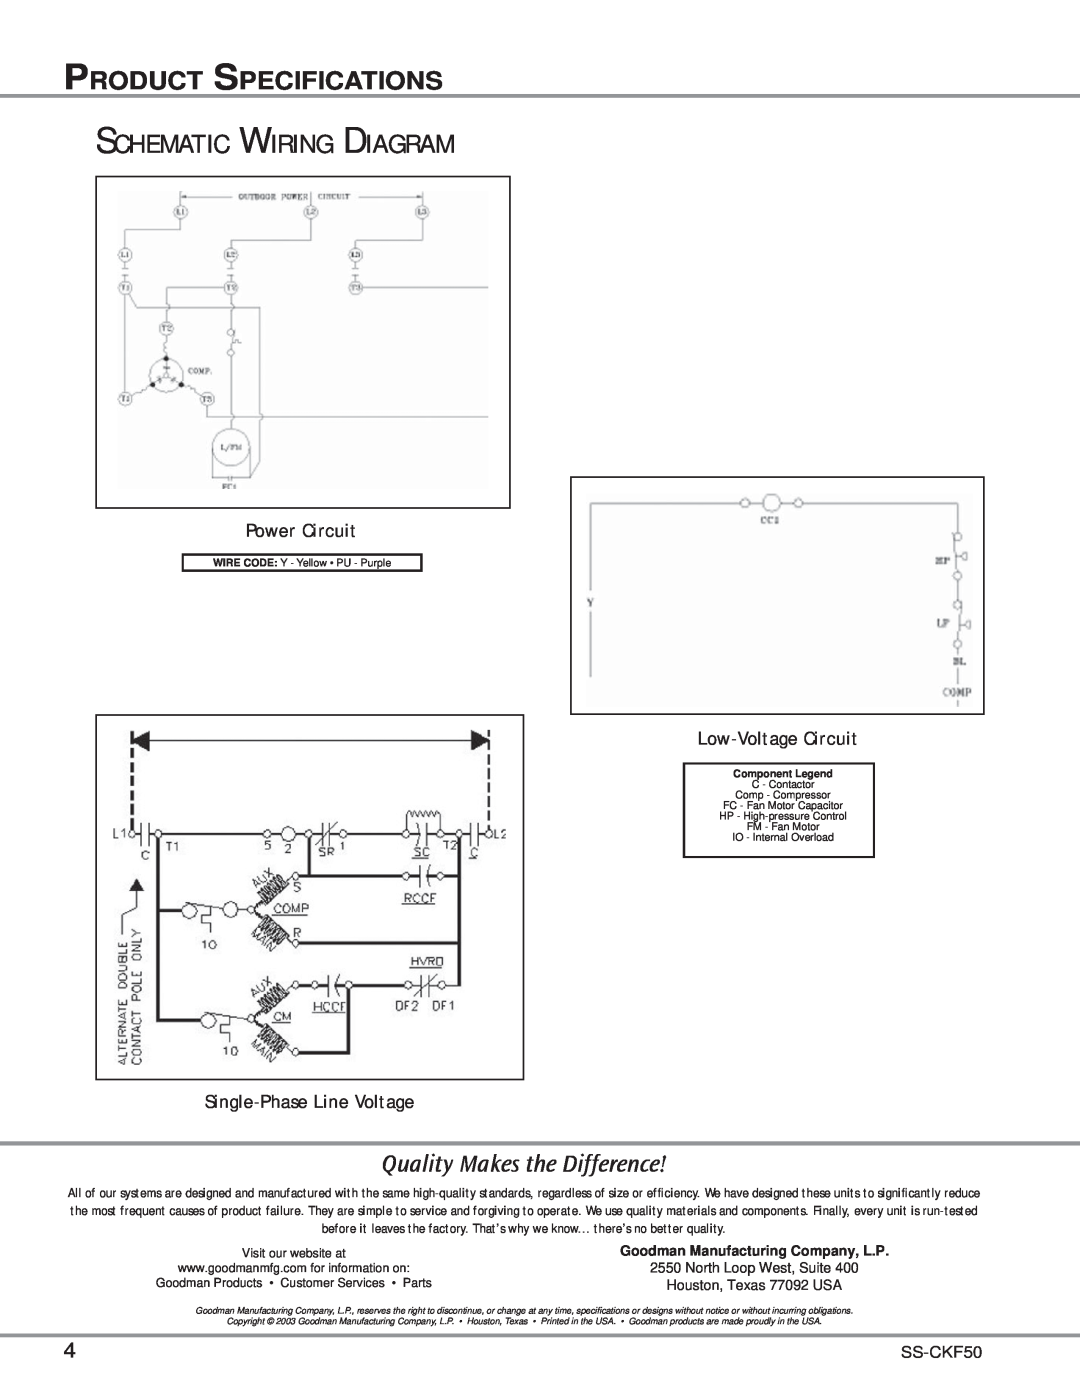 Goodman Mfg SS-CKF50 specifications Schematic Wiring Diagram, Power Circuit, Low-VoltageCircuit, Single-PhaseLine Voltage 